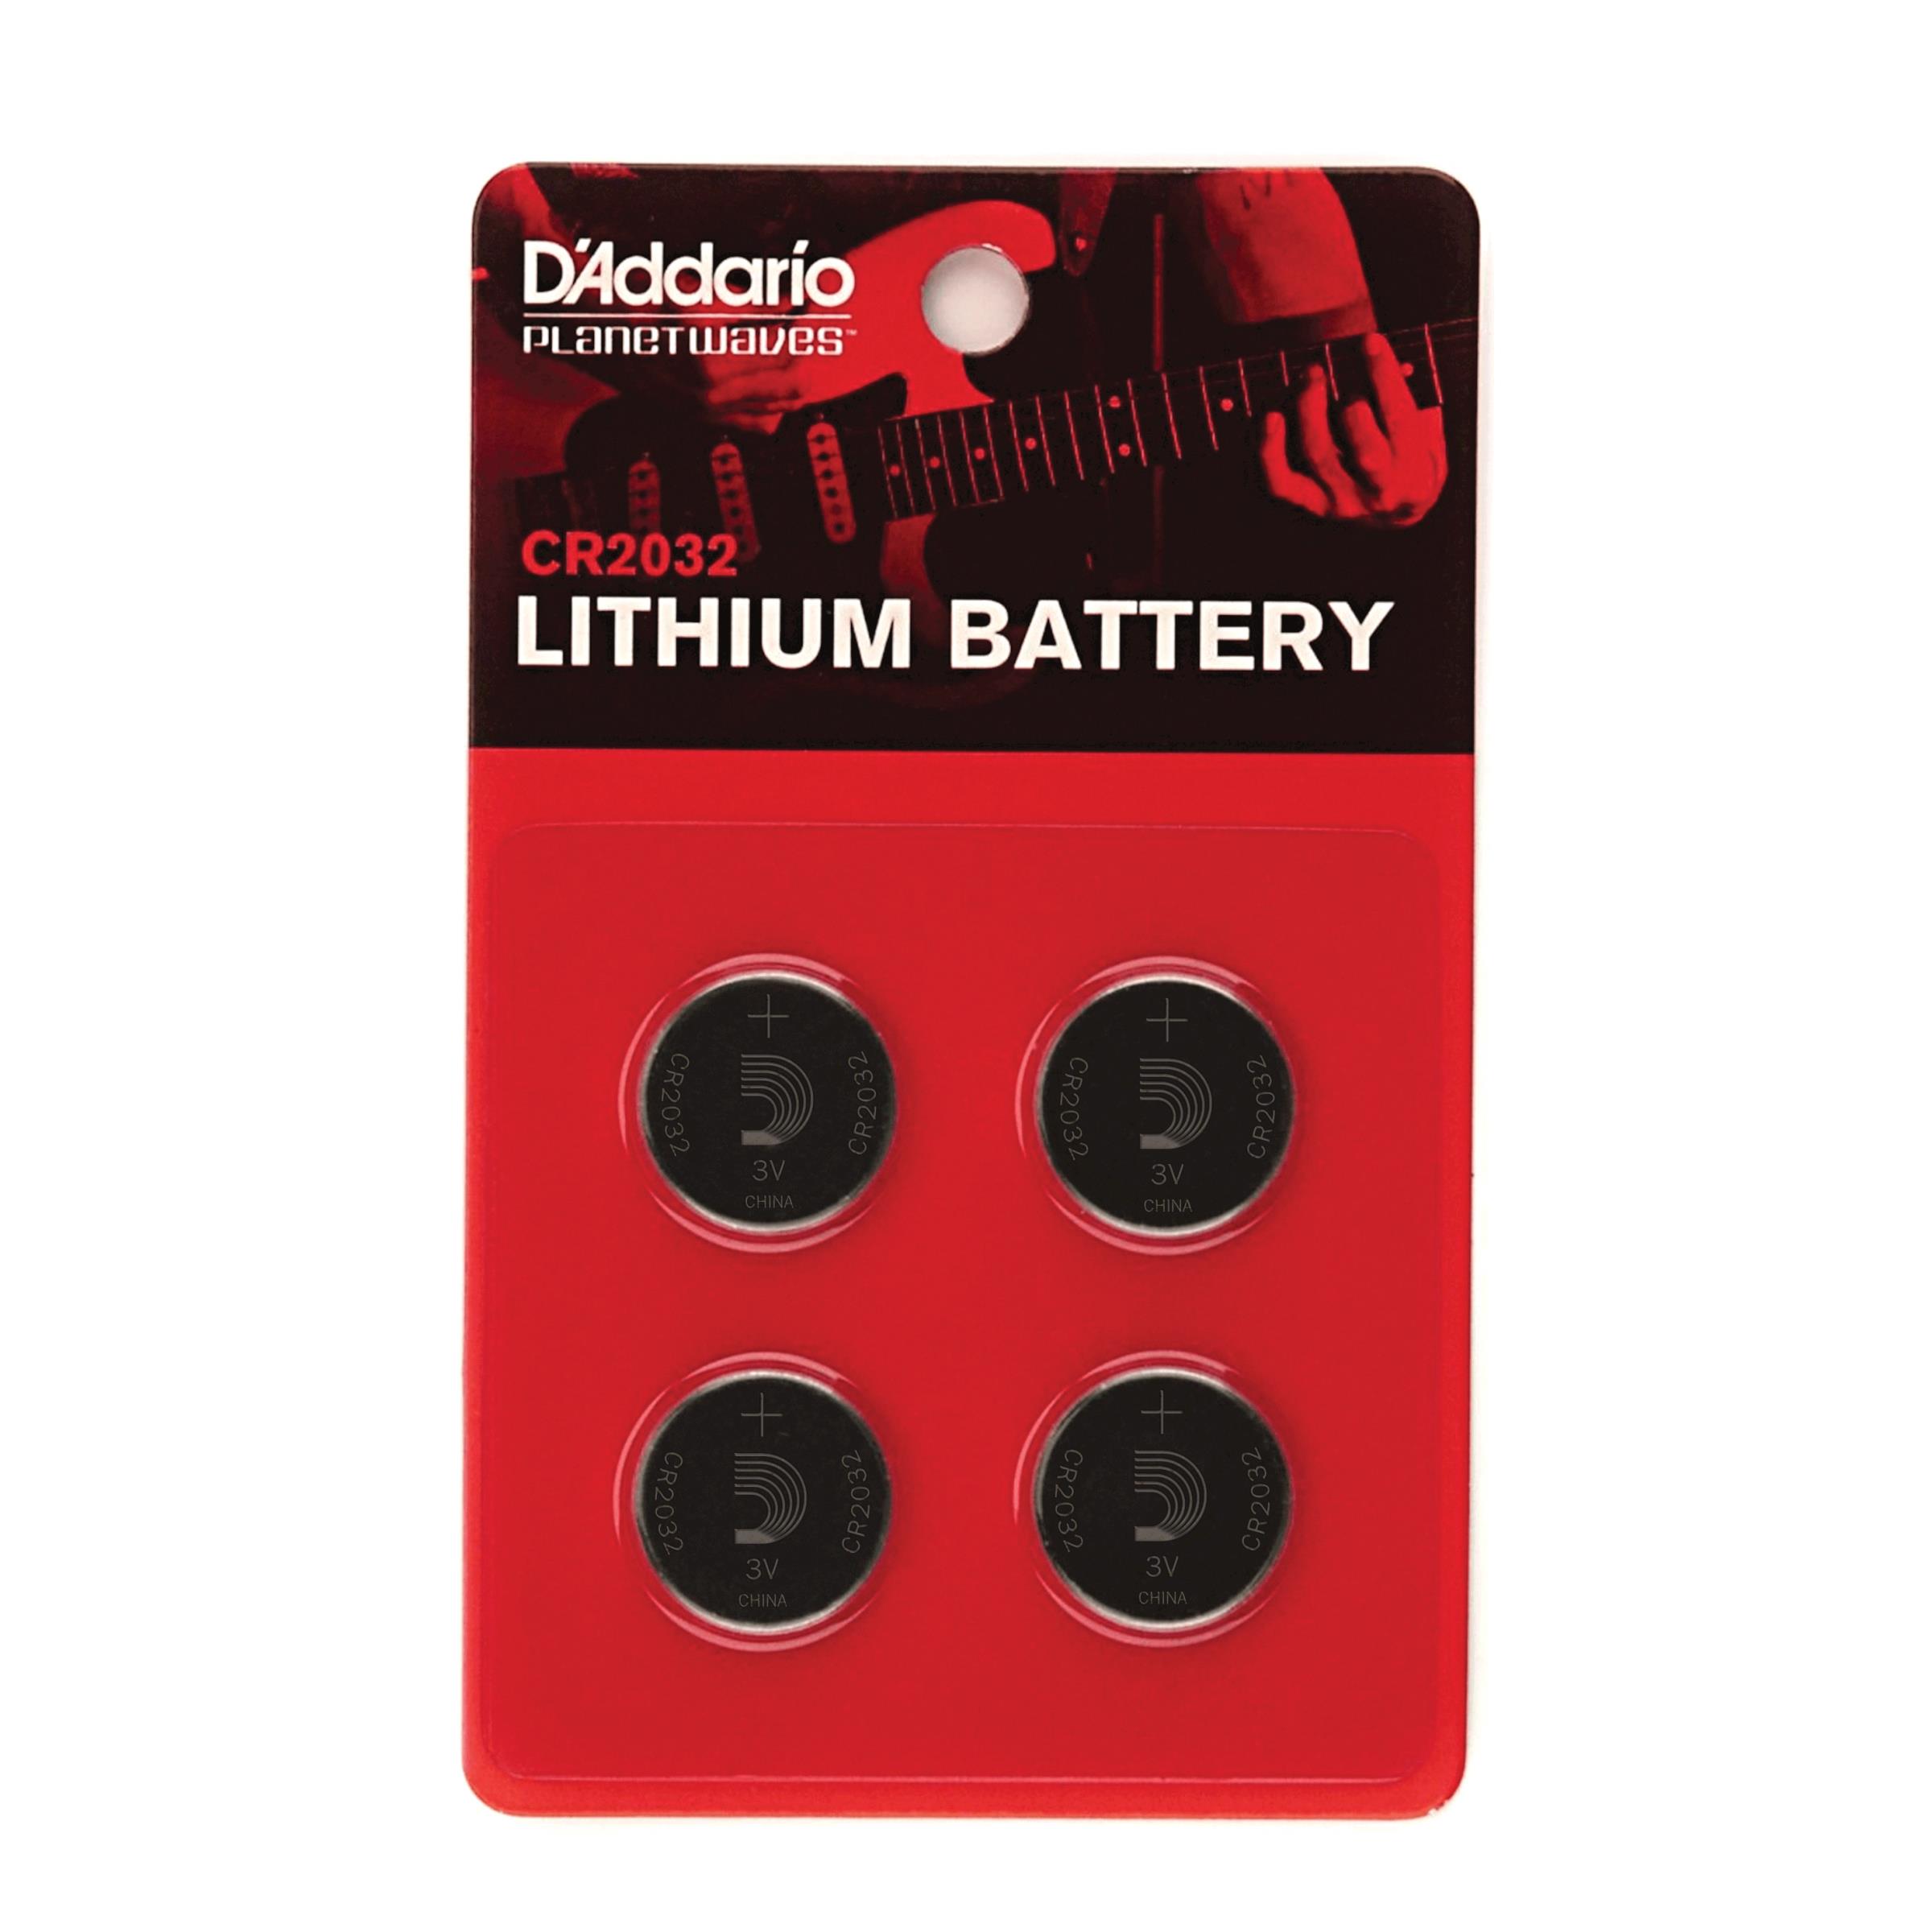 DAddario Lithium Battery, 4-pack